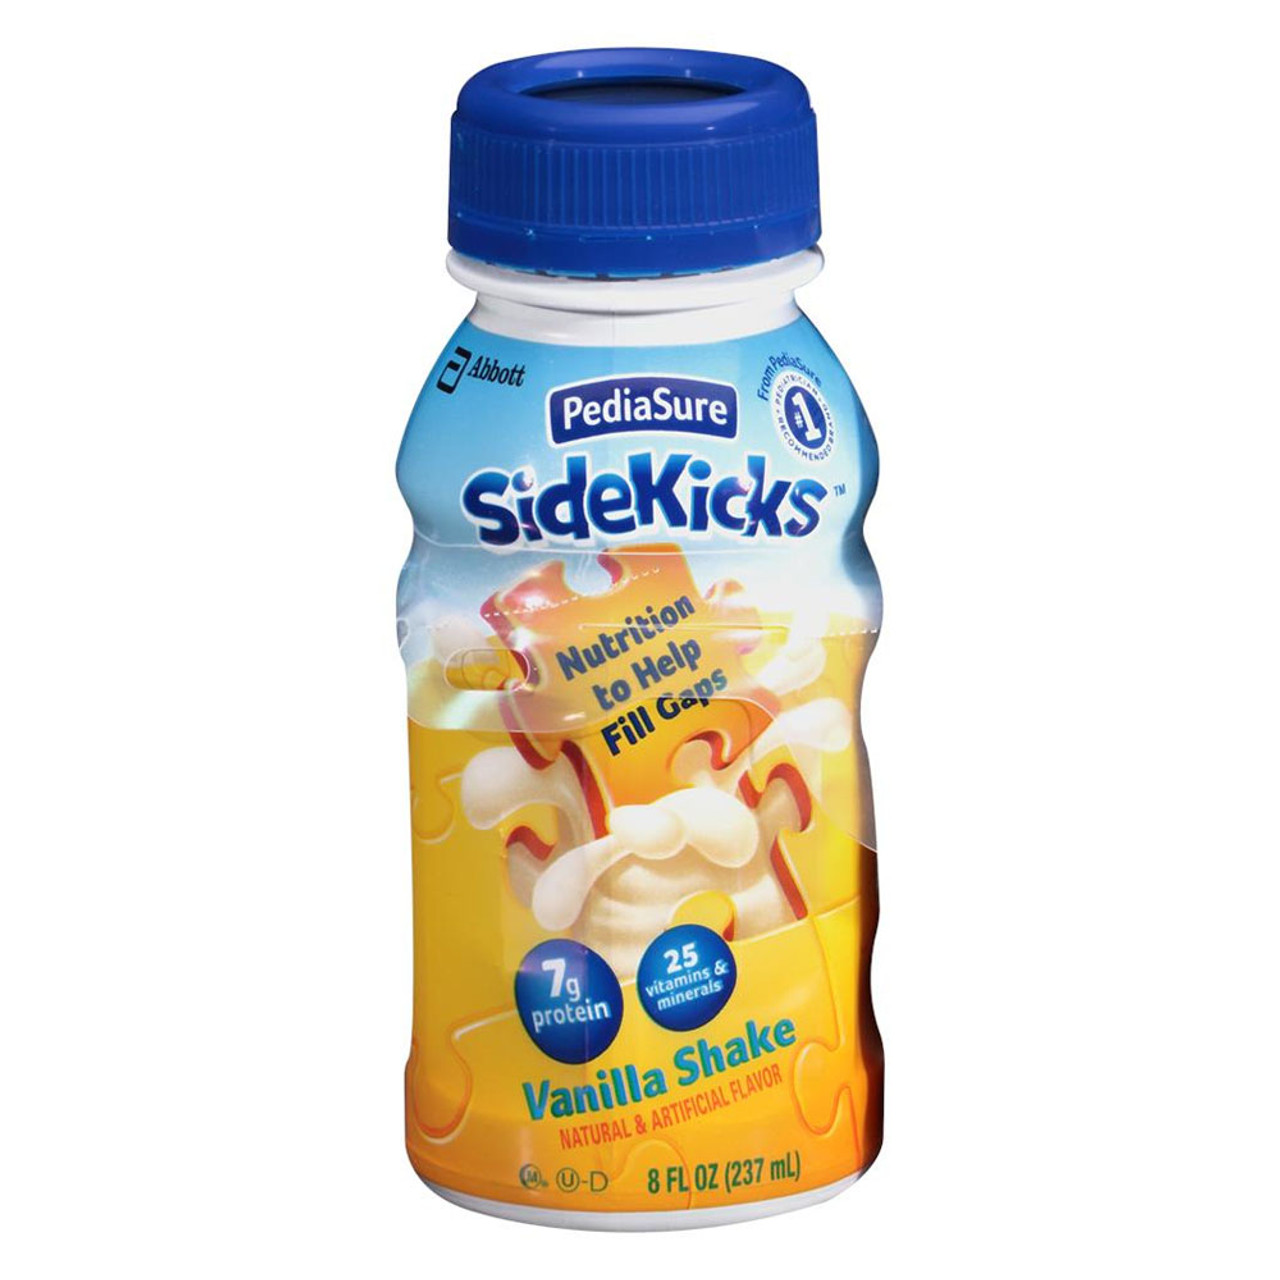  PediaSure Sidekicks Nutrition Drink, Chocolate, 8 fl